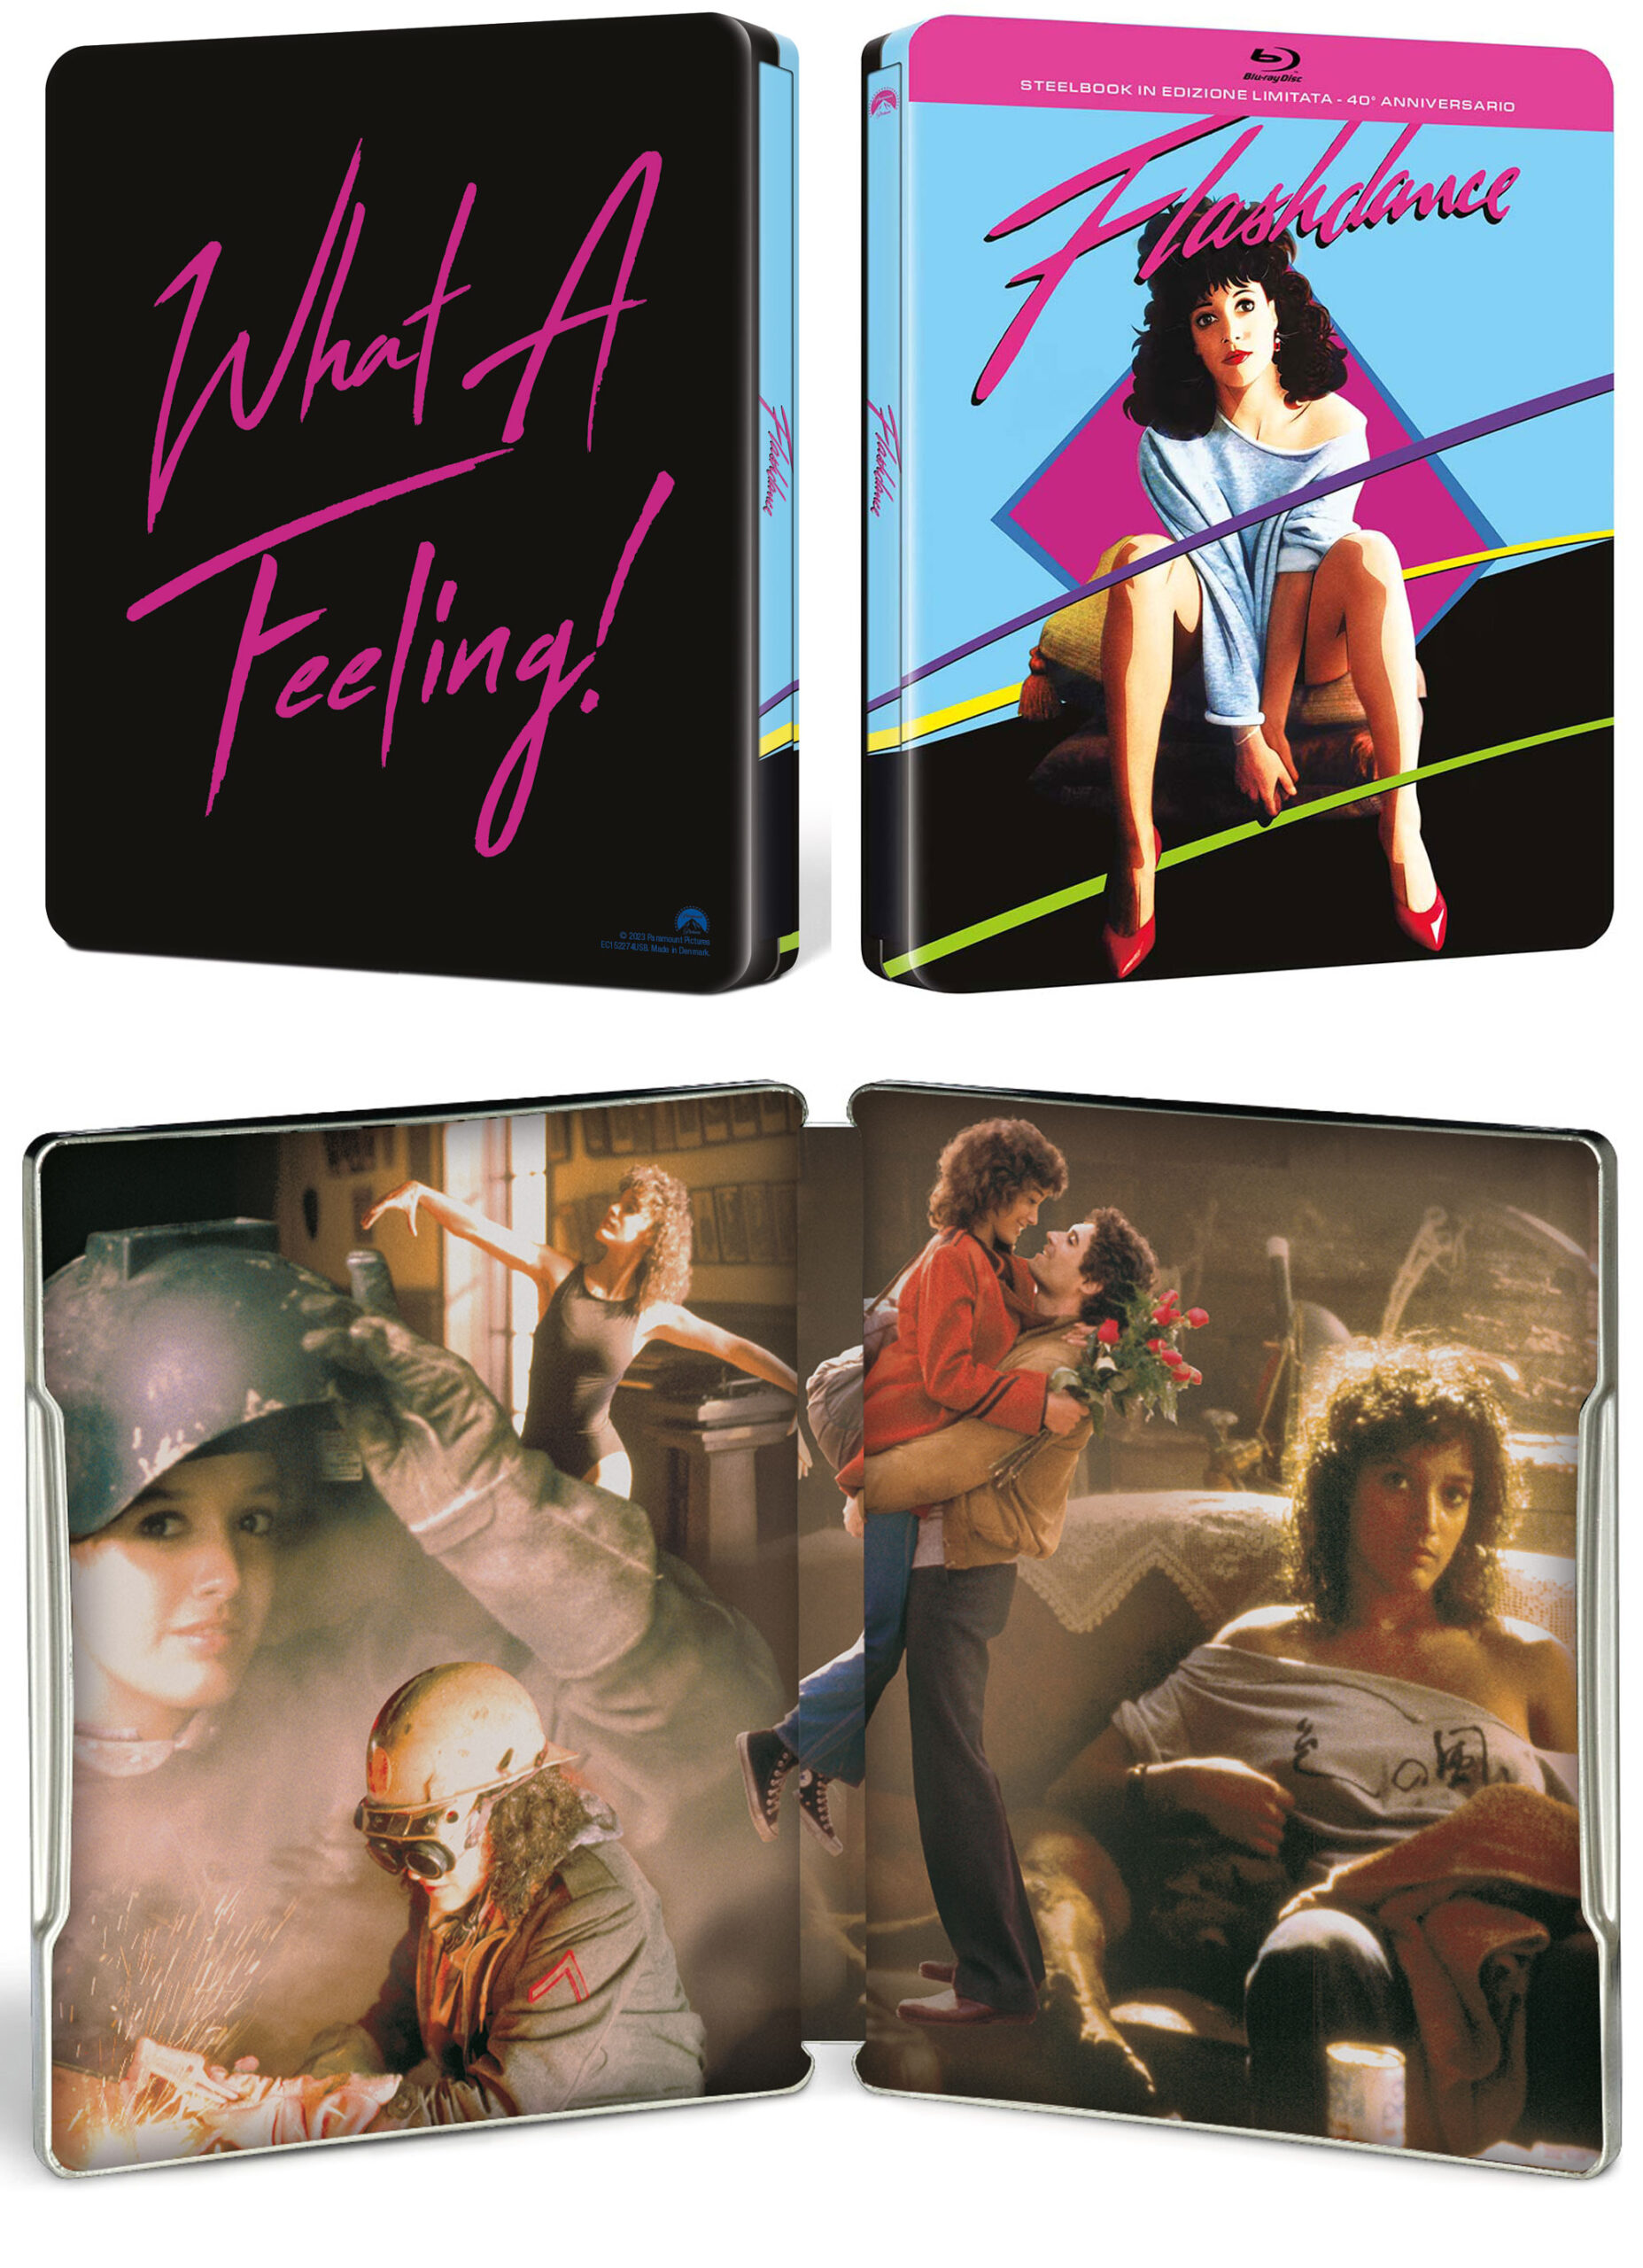 Flashdance in Steelbook Blu-ray